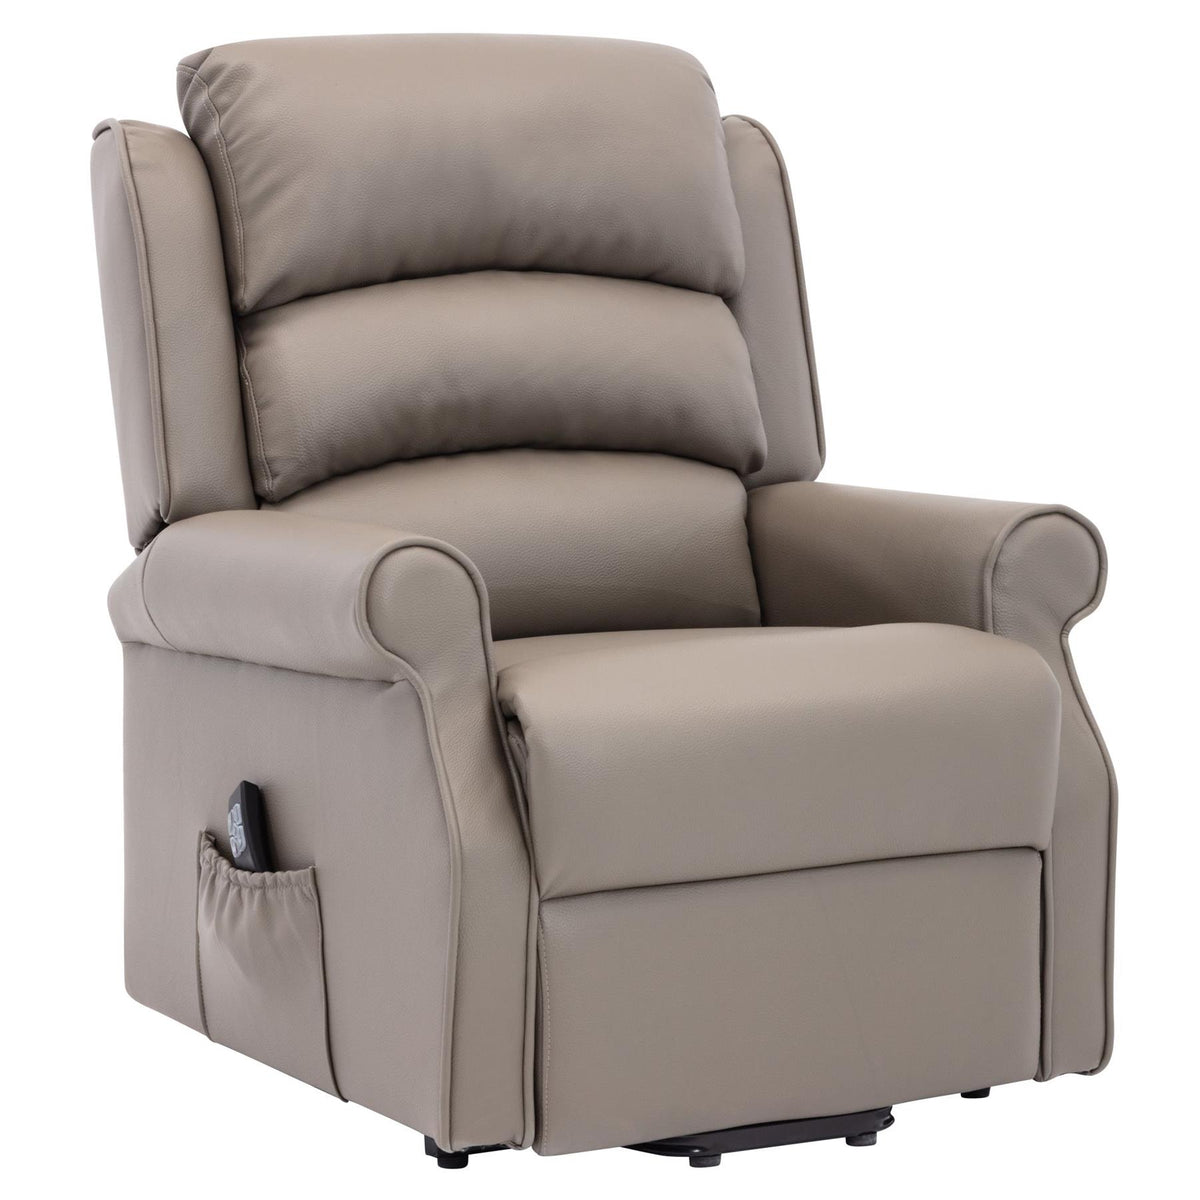 The Perth - Dual Motor Riser Recliner Mobility Chair in Grey Plush Fau ...